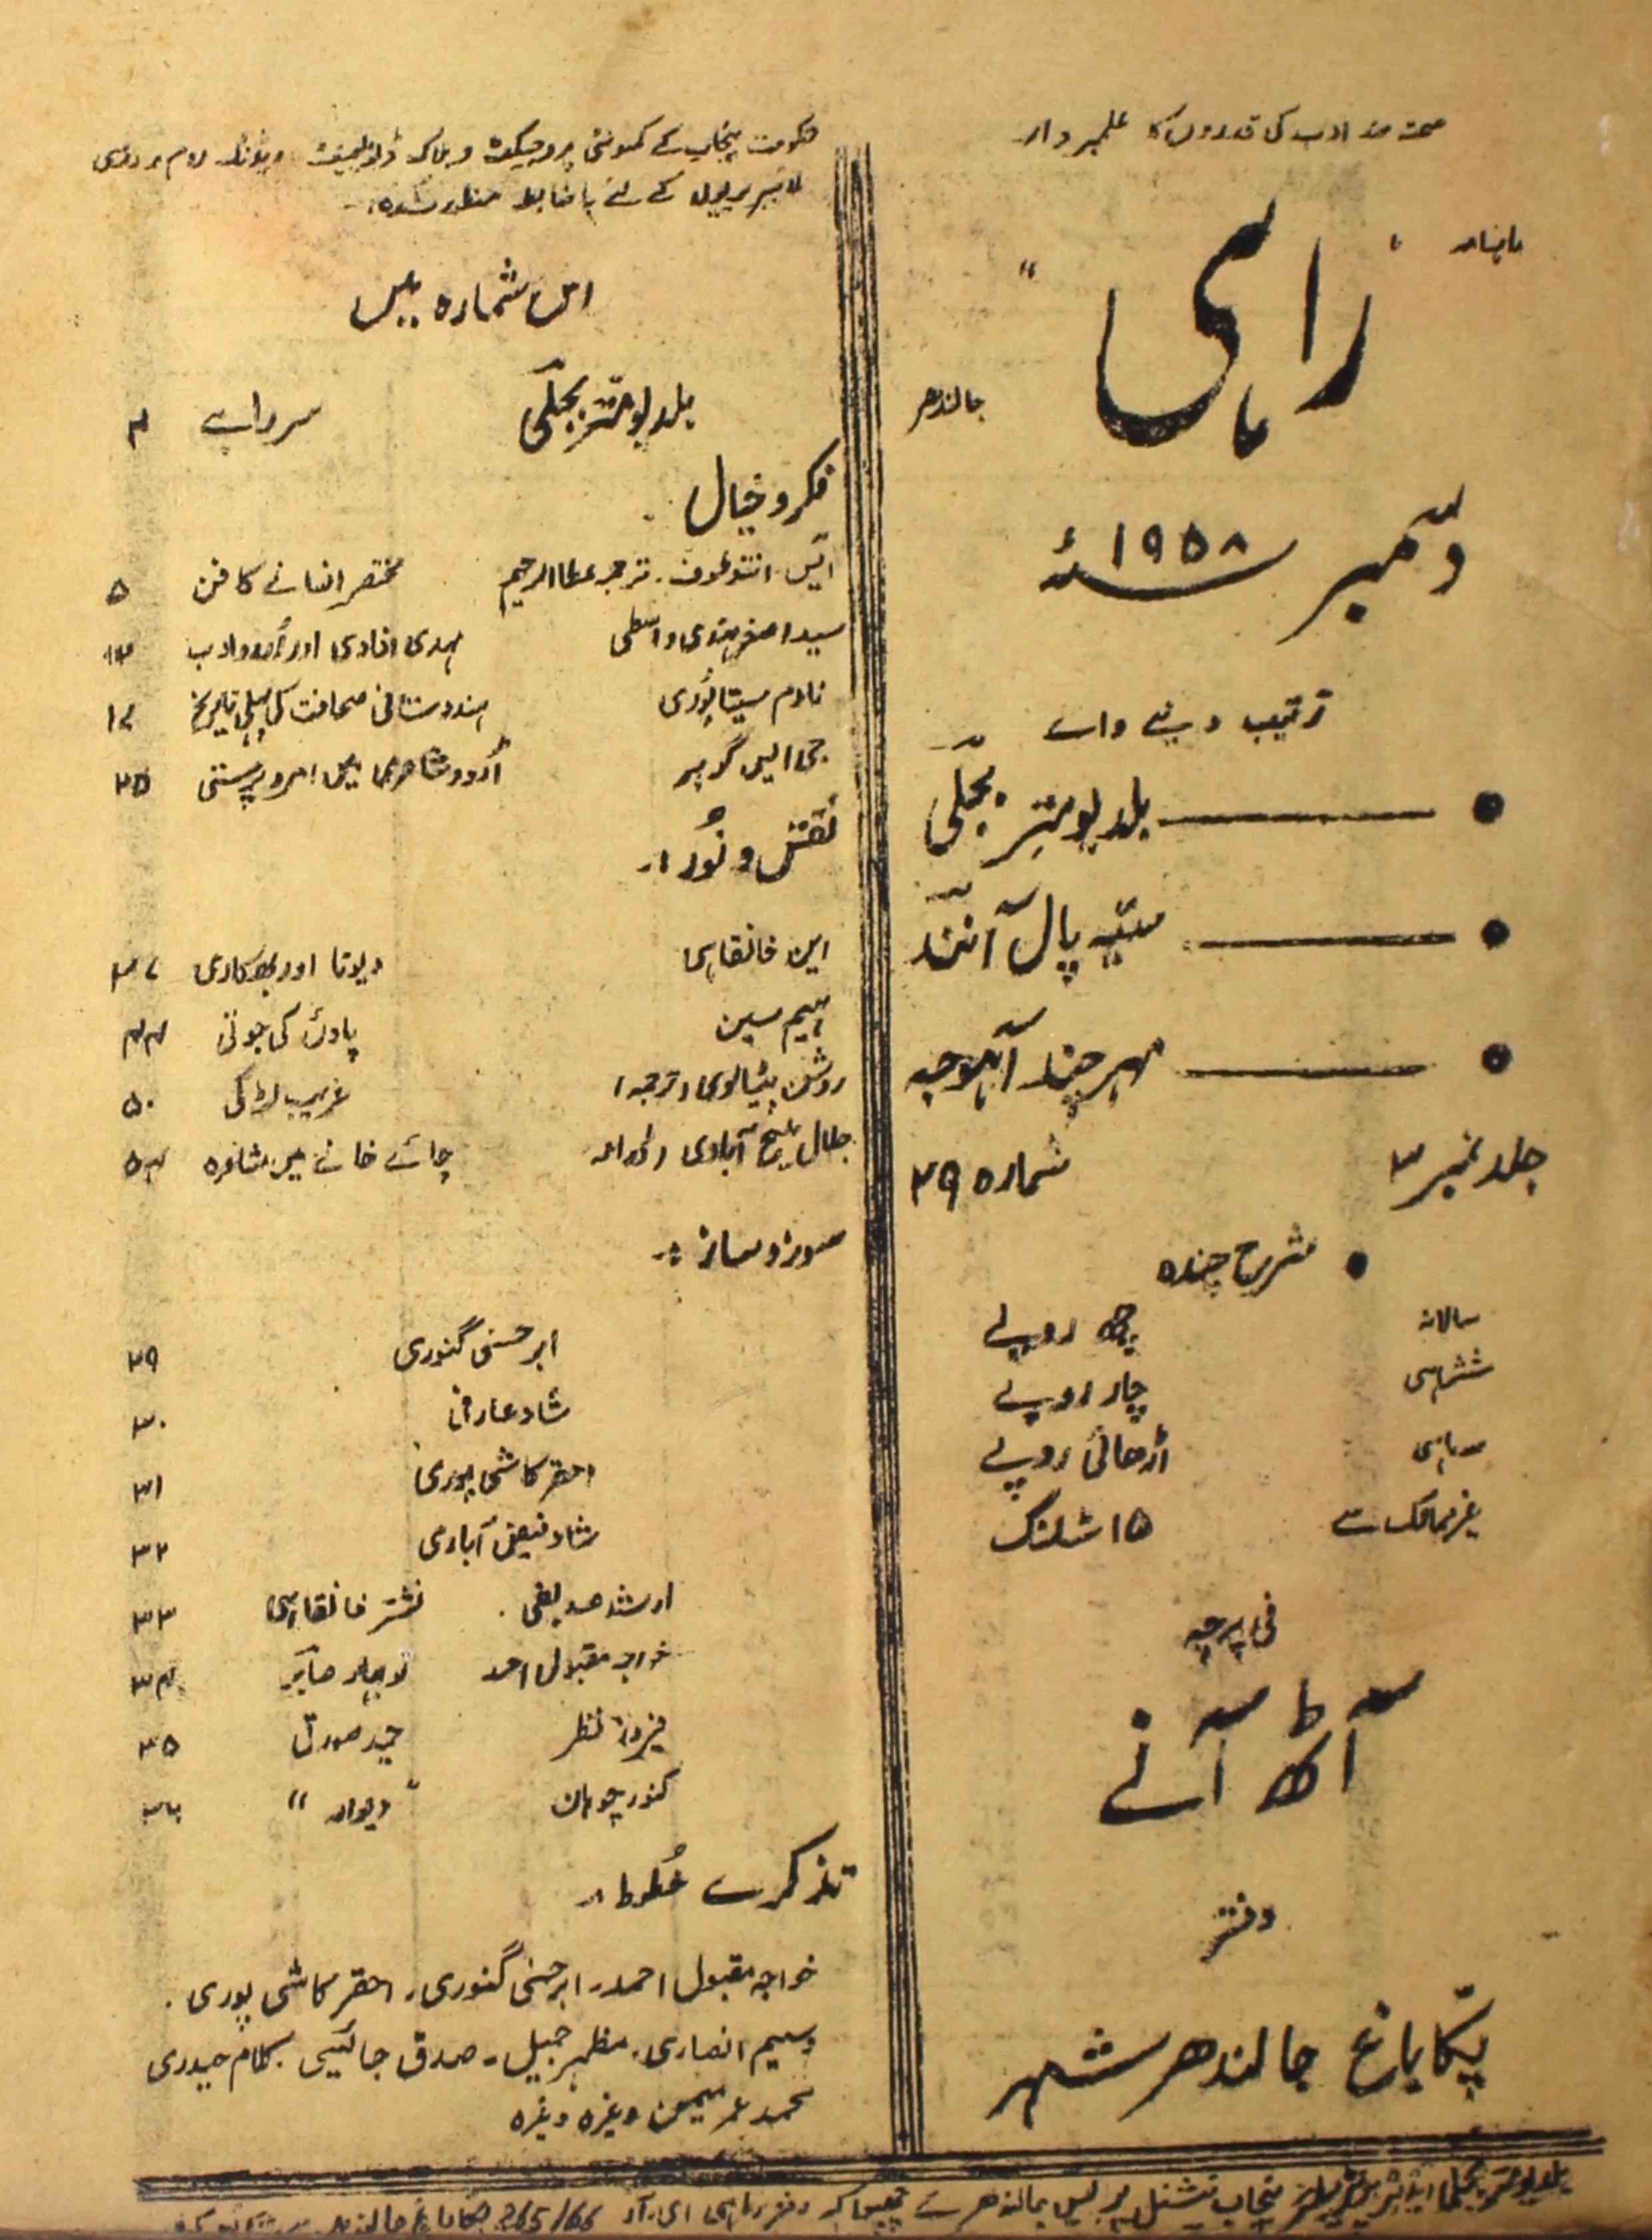 Rahi Jild 3 Shumara 29 December 1958-Svk-Shumara Number-029